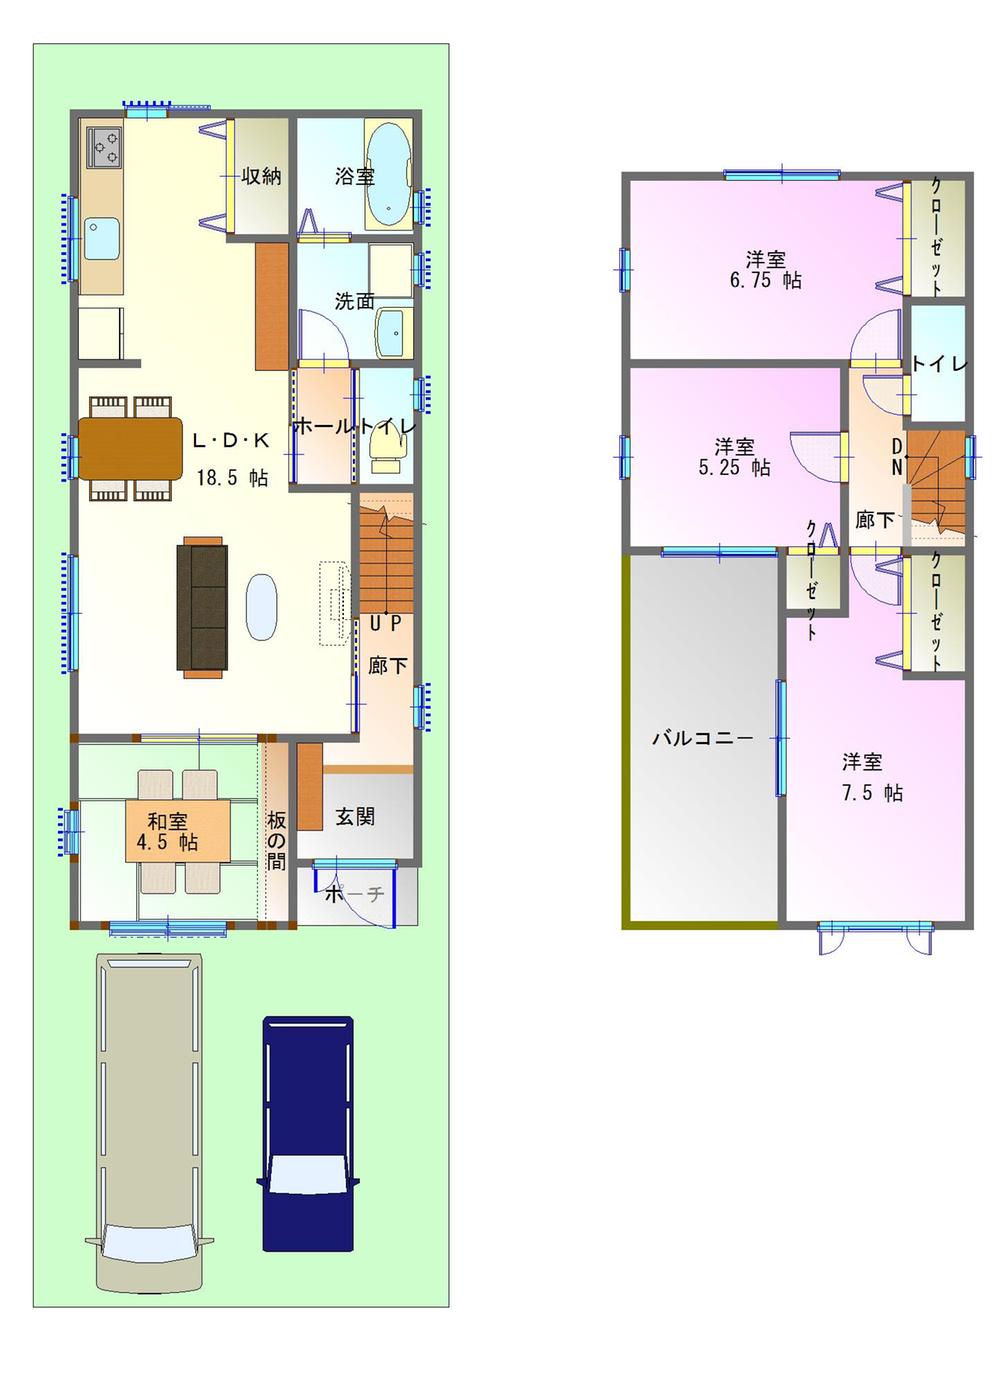 Building plan example (floor plan). Building plan example (No. 6 locations) 4LDK, Land price 20,050,000 yen, Land area 109.17 sq m , Building price 15,750,000 yen, Building area 97.6 sq m